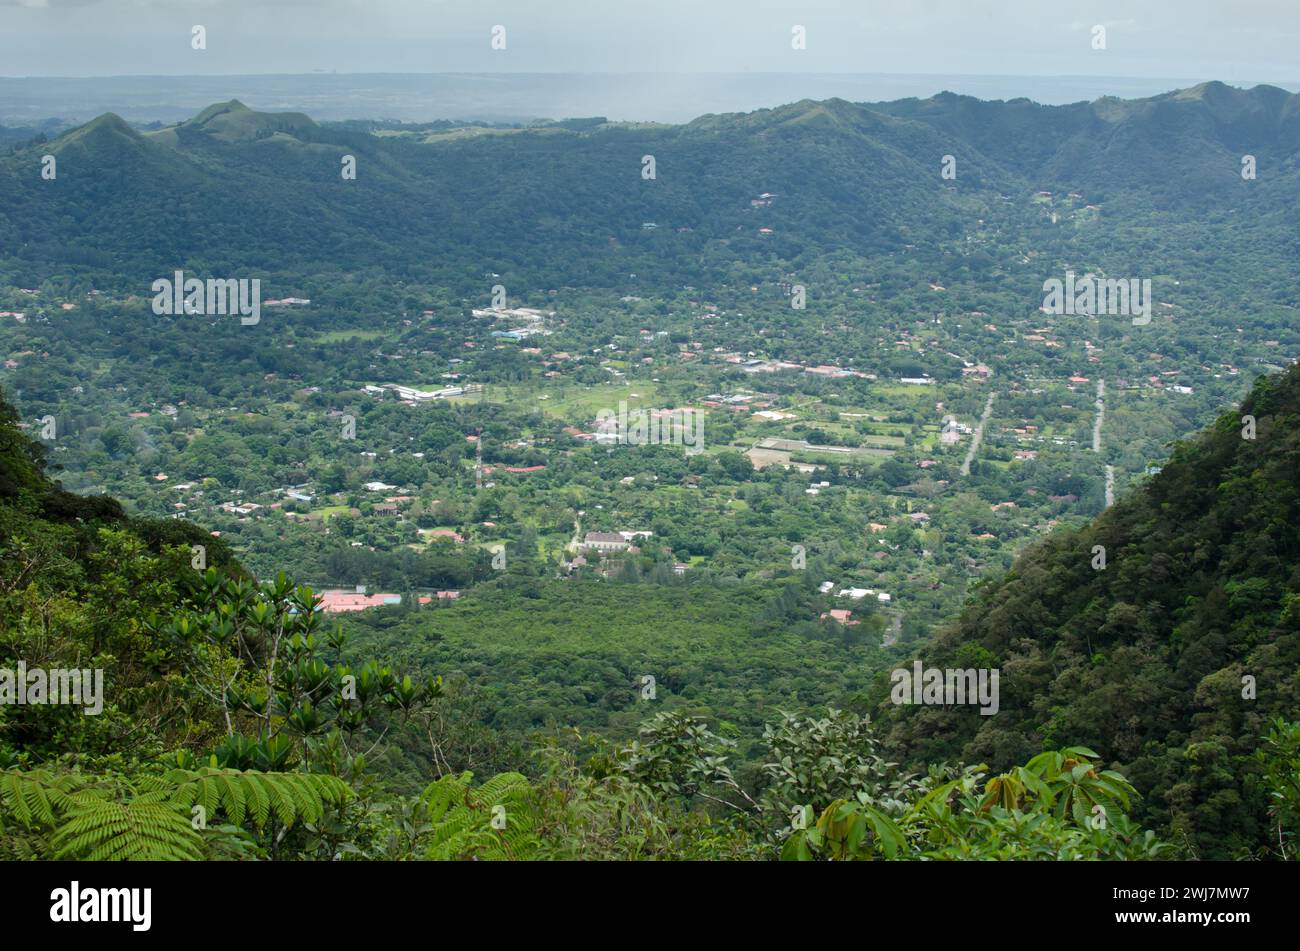 Vista panoramica di El Valle de Anton dalle montagne circostanti Foto Stock